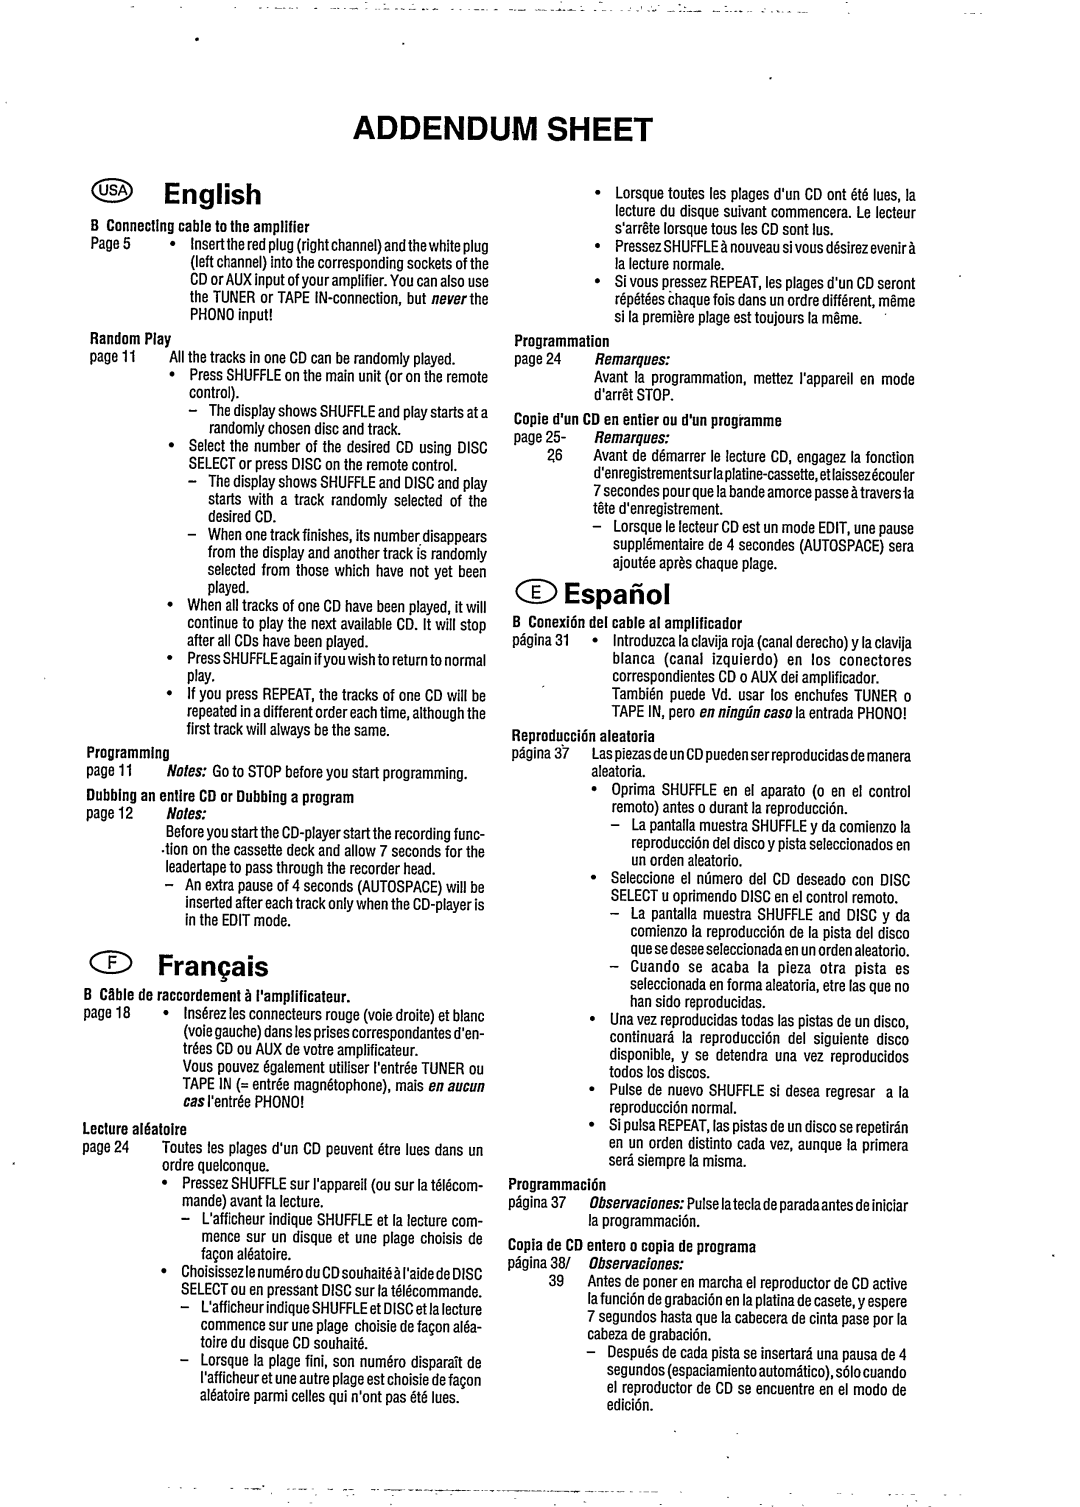 Philips CDC 745/05 manual 